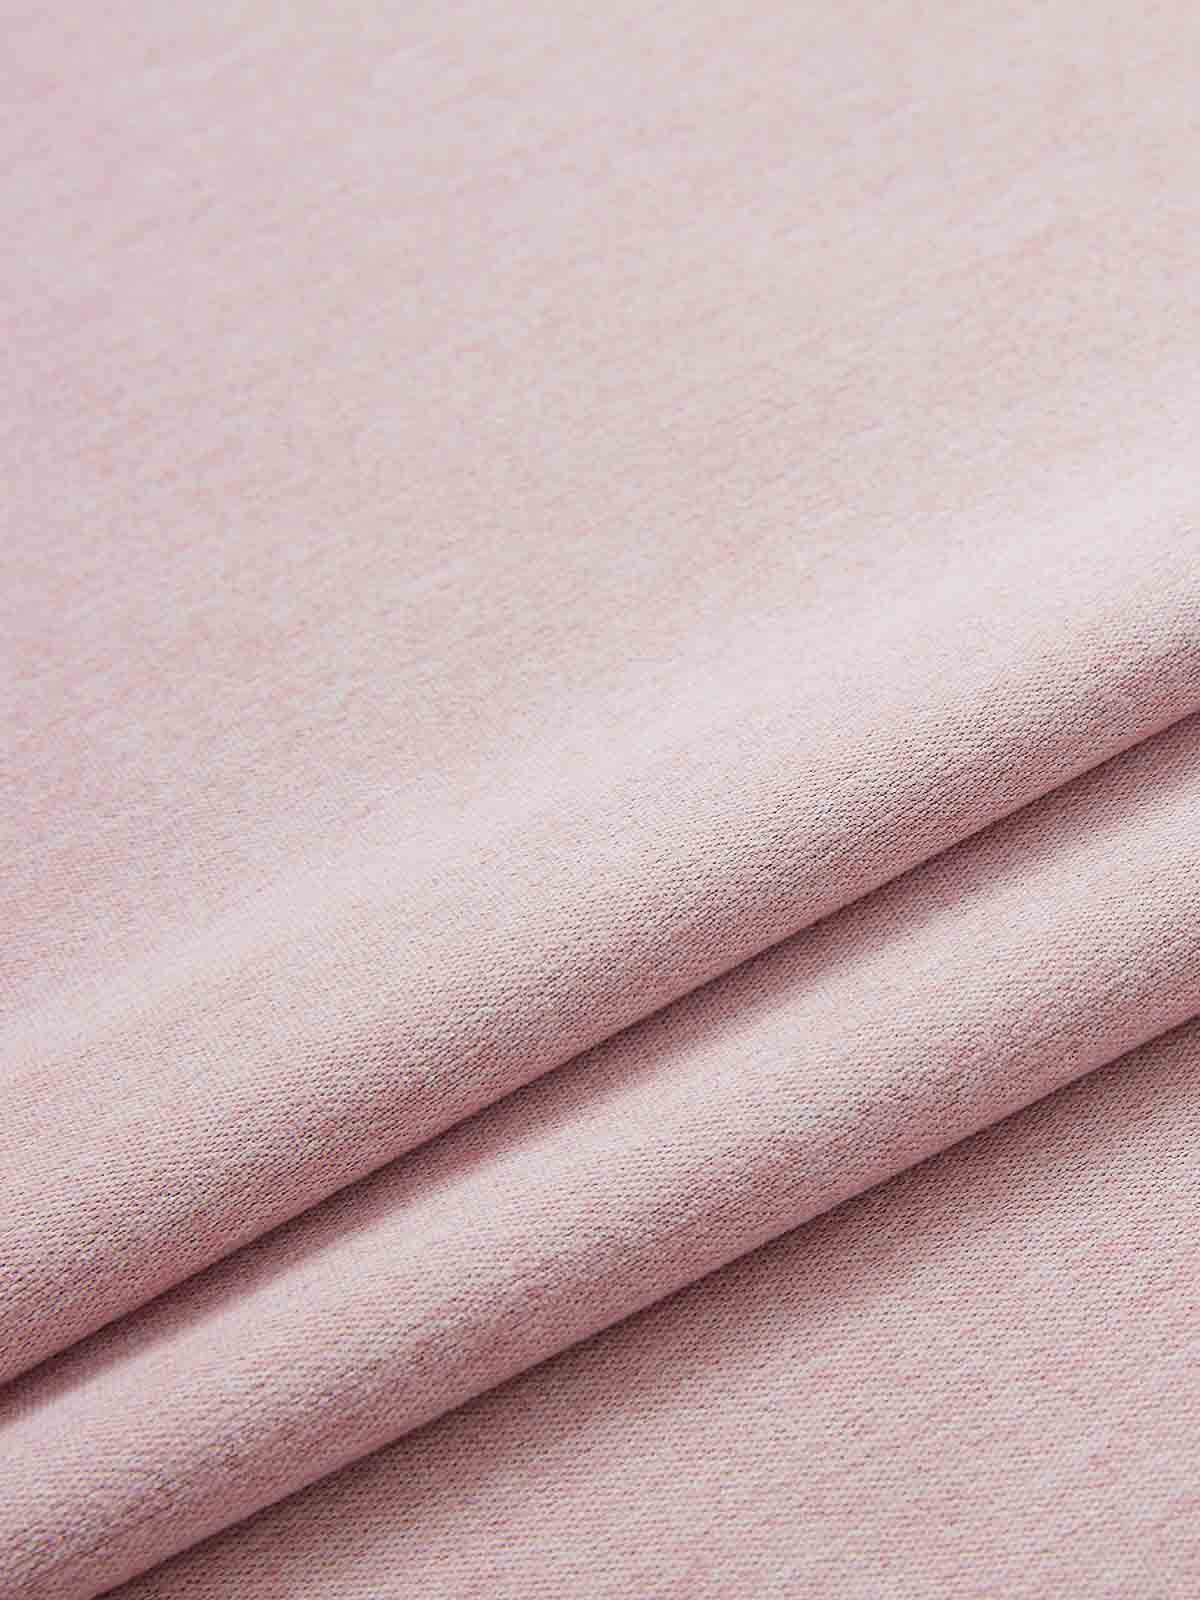 Solid Elegant Pink Curtain